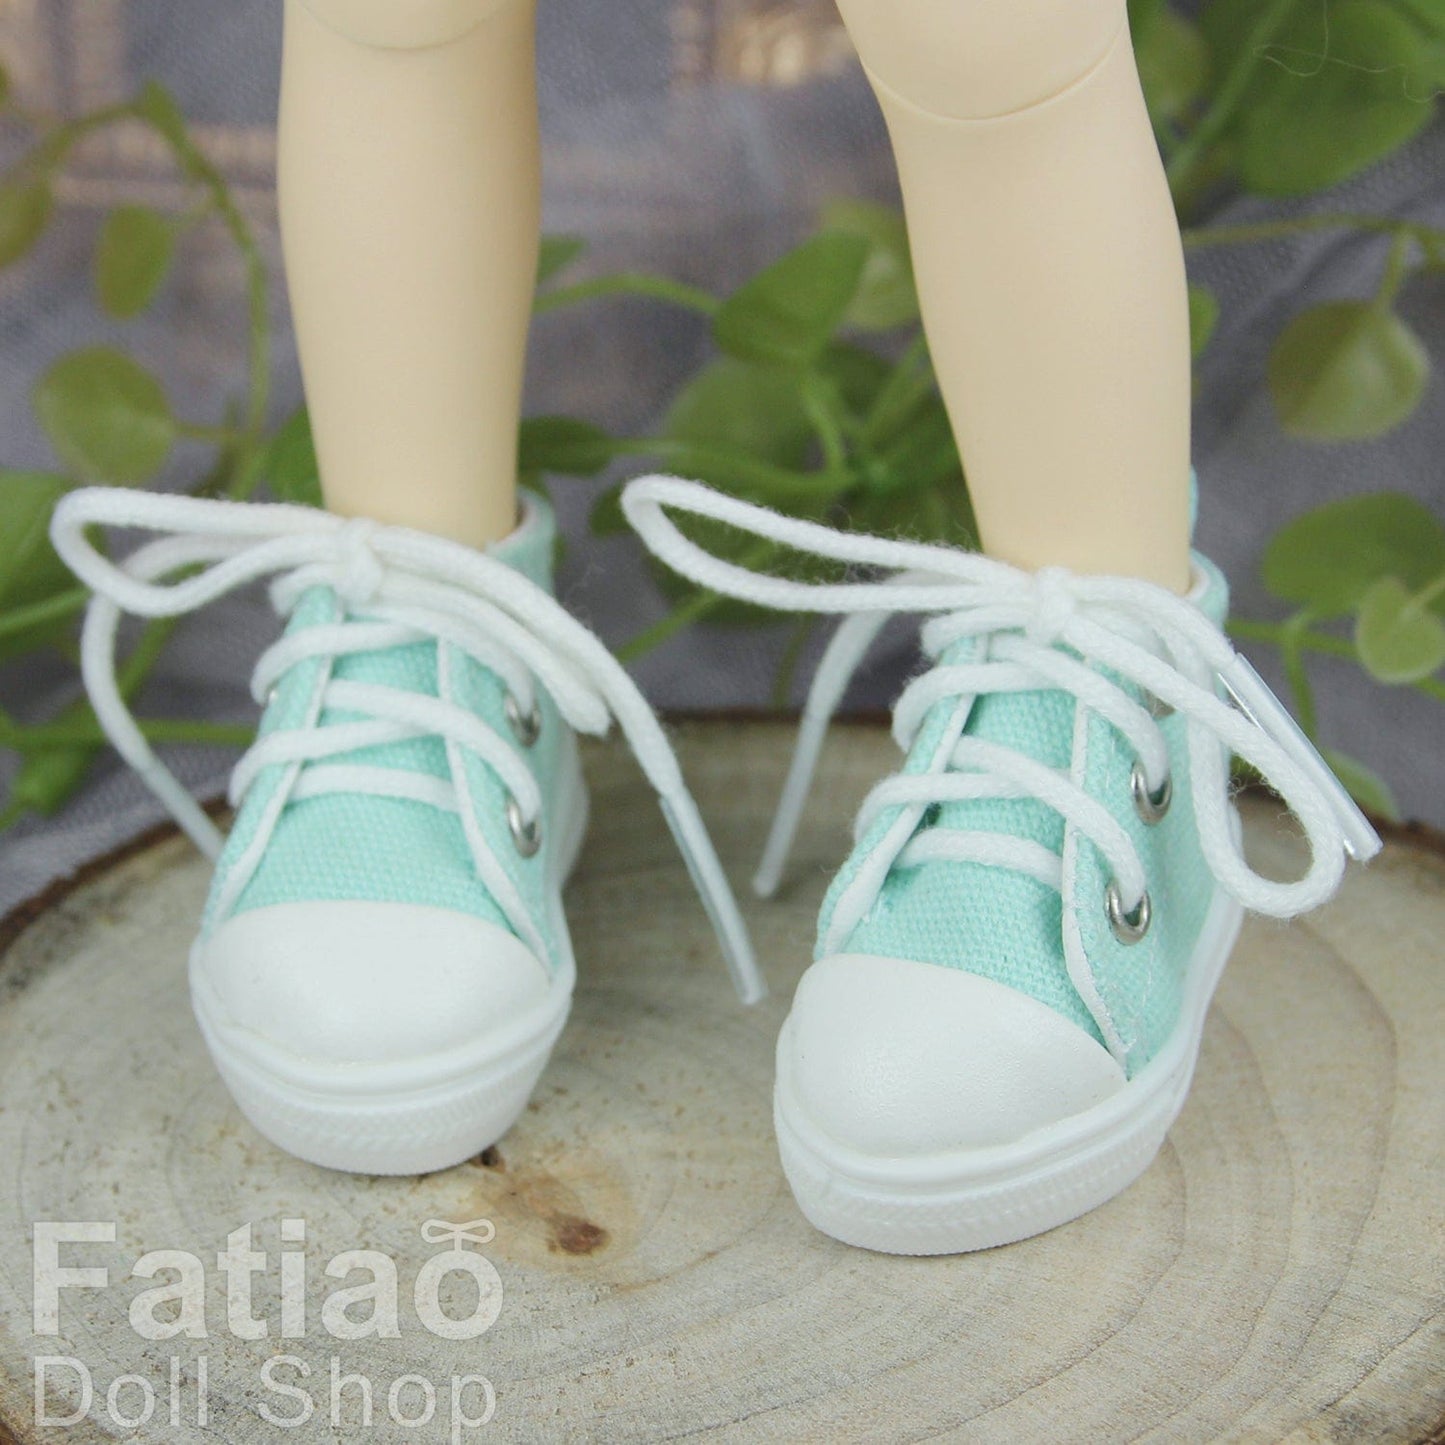 【Fatiao Doll Shop】帆布鞋 多色 / BJD 6分 YoSD iMda 3.0